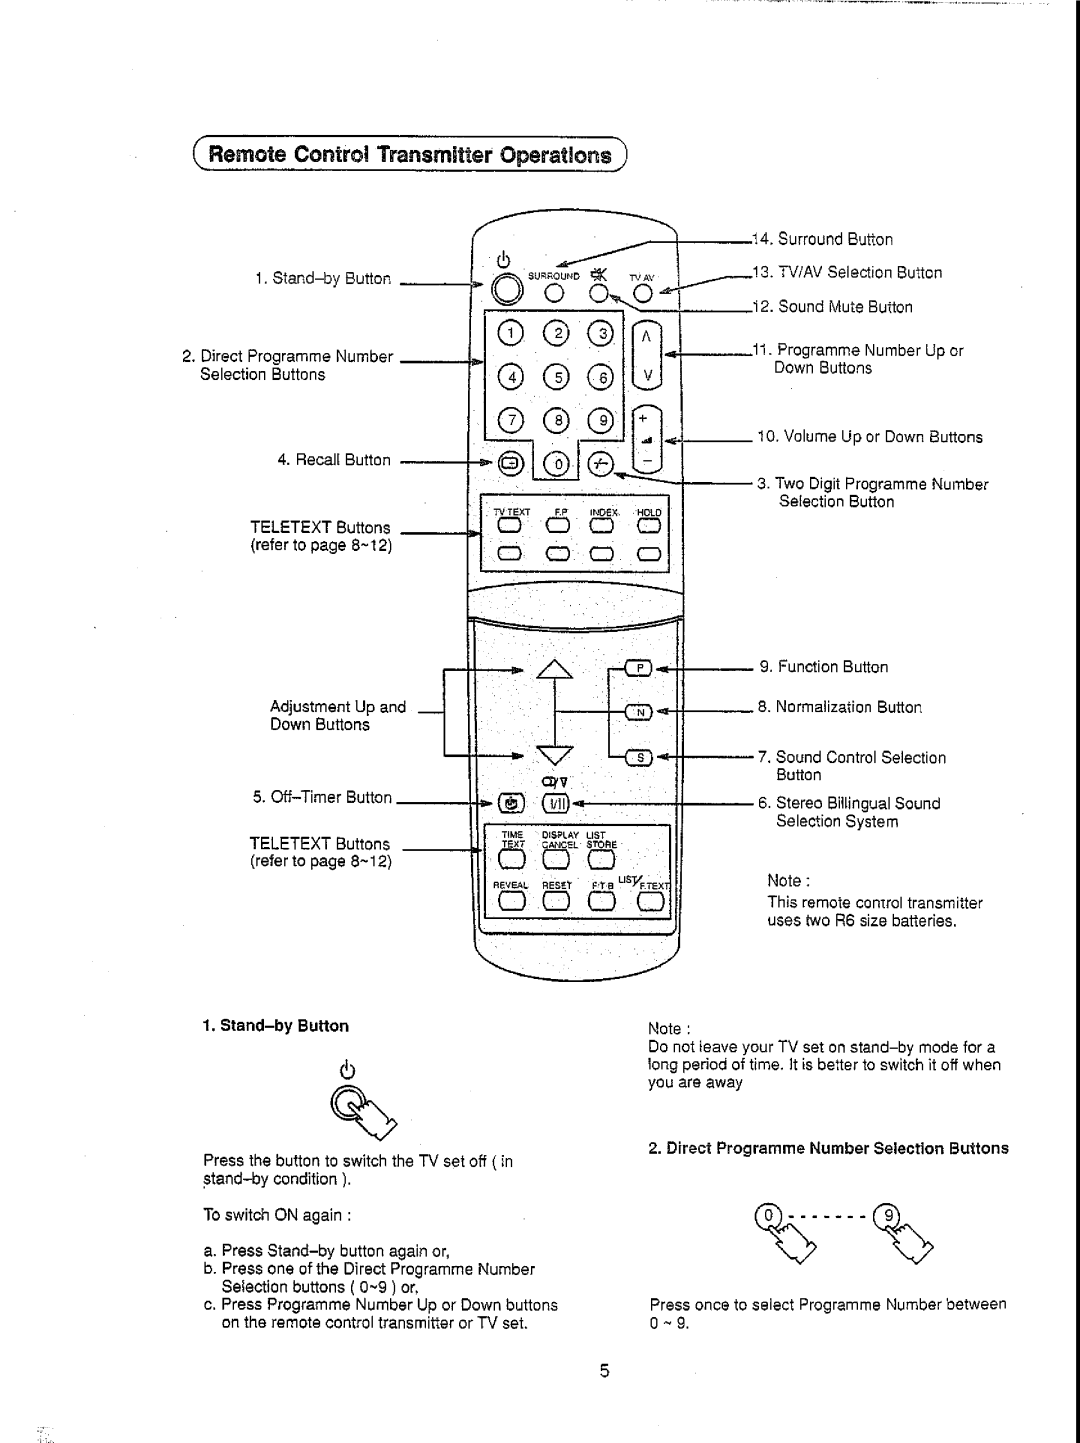 Panasonic TX-21V50Z, TX-21V50X manual 